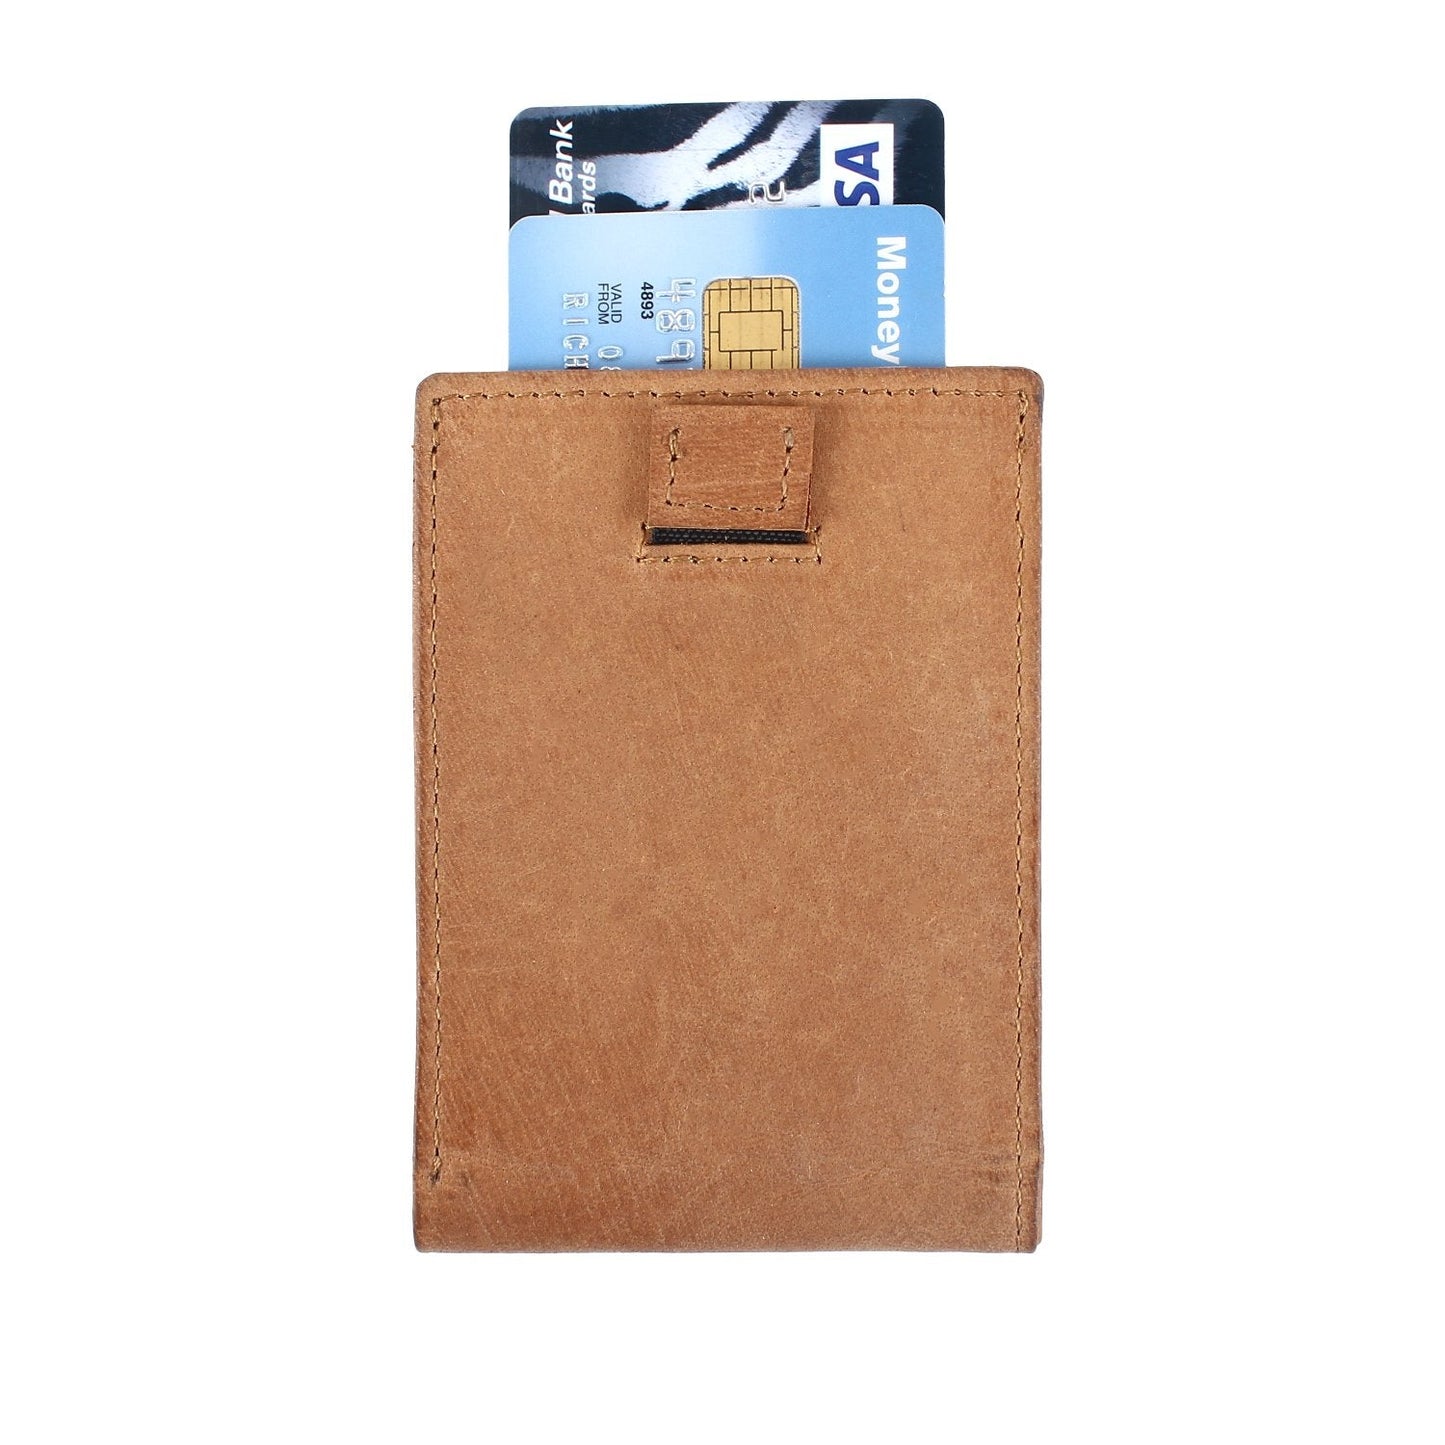 Tan Colour Bi-Fold Italian Leather Money Clip Card Holder/Slim Wallet (6 Cards + 1 ID Slot + Cash Compartment )